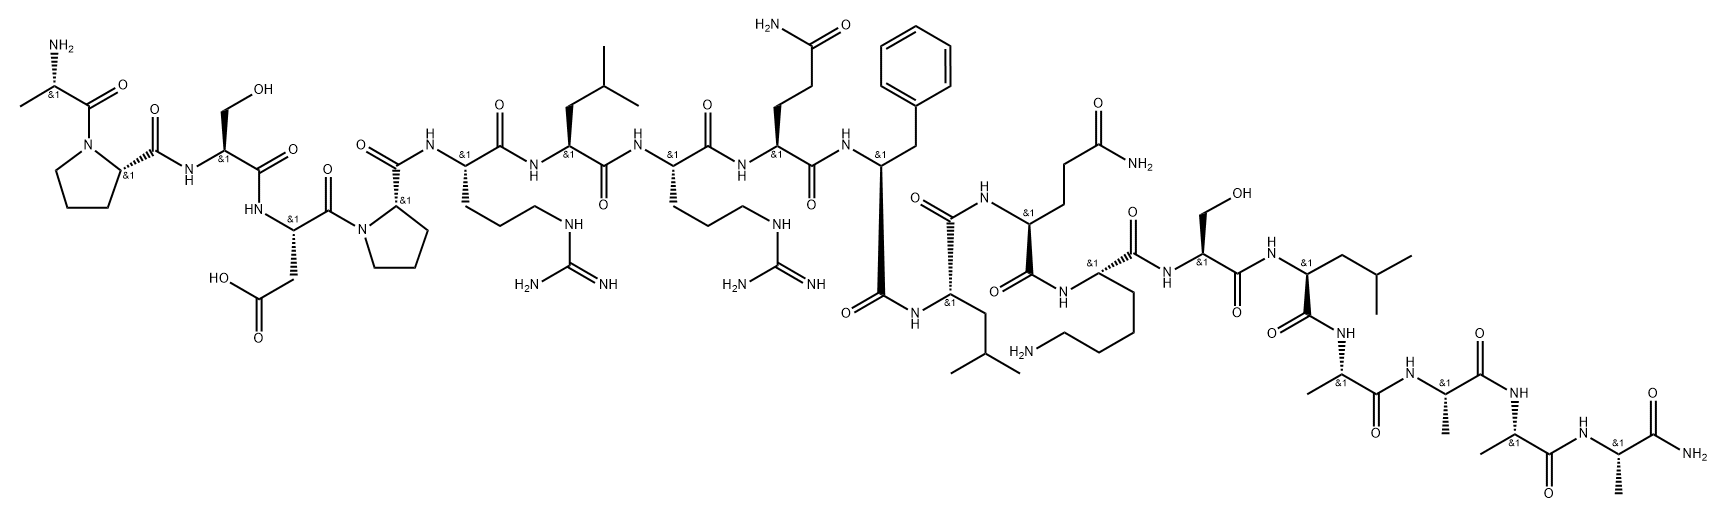 Neuronostatin-19 (human, canine, porcine) Structure